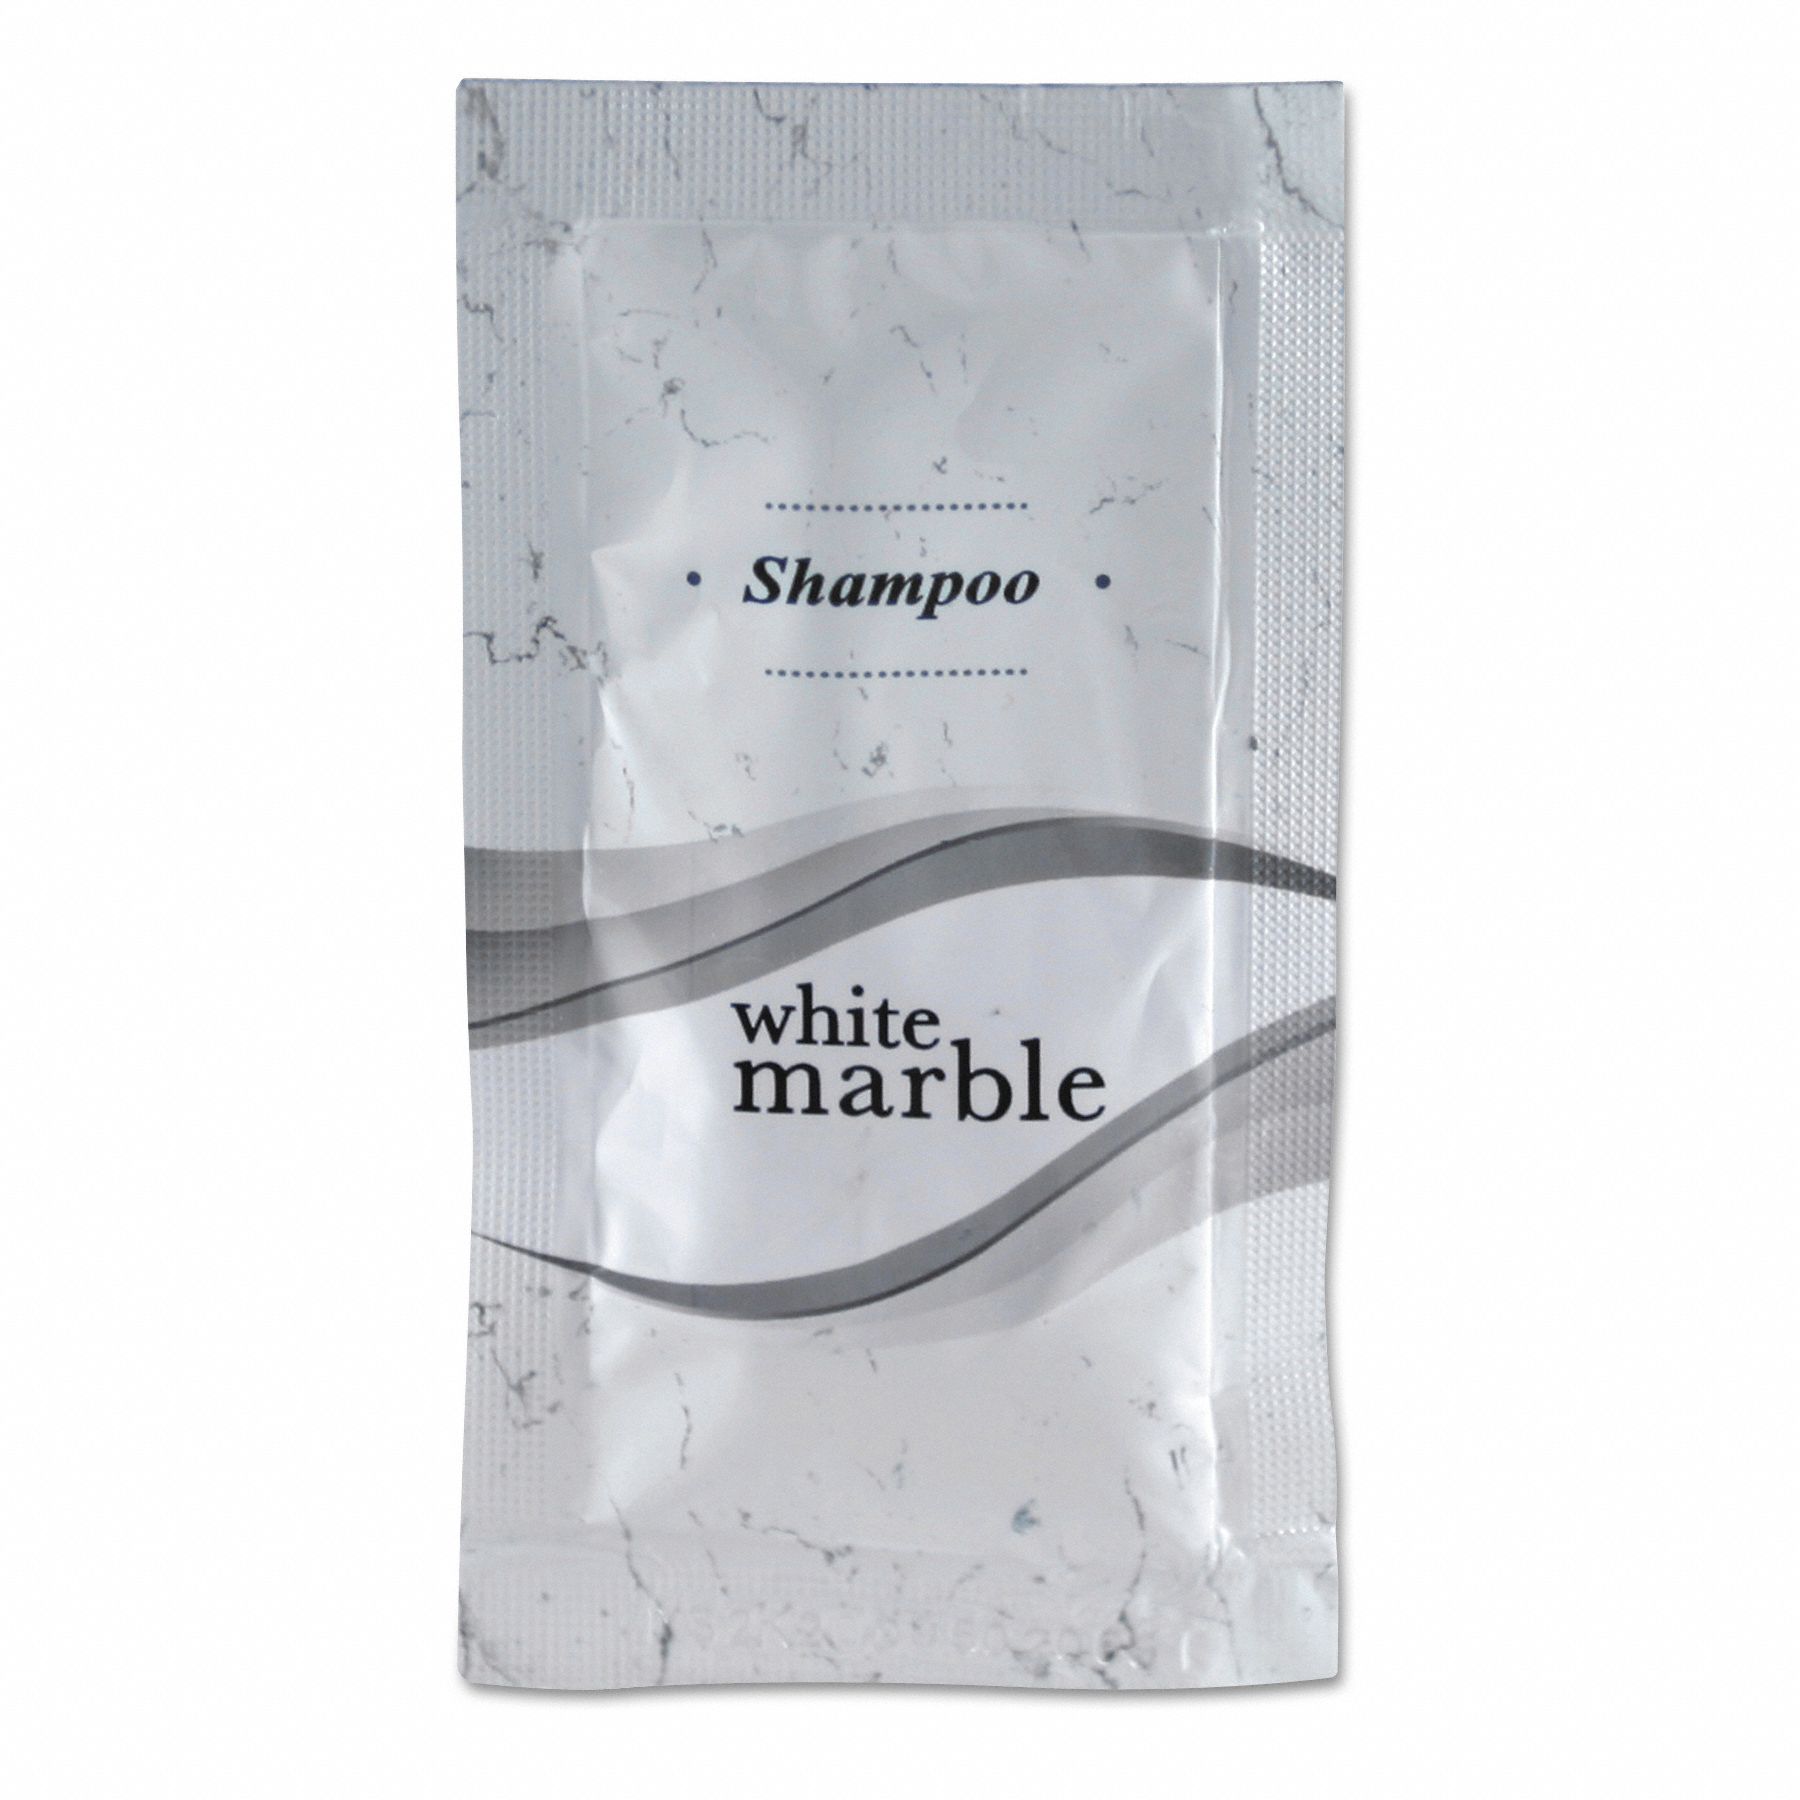 Shampoo: Packet, 0.25 oz Size, Clean, White Marble, Aloe Vera, 500 PK